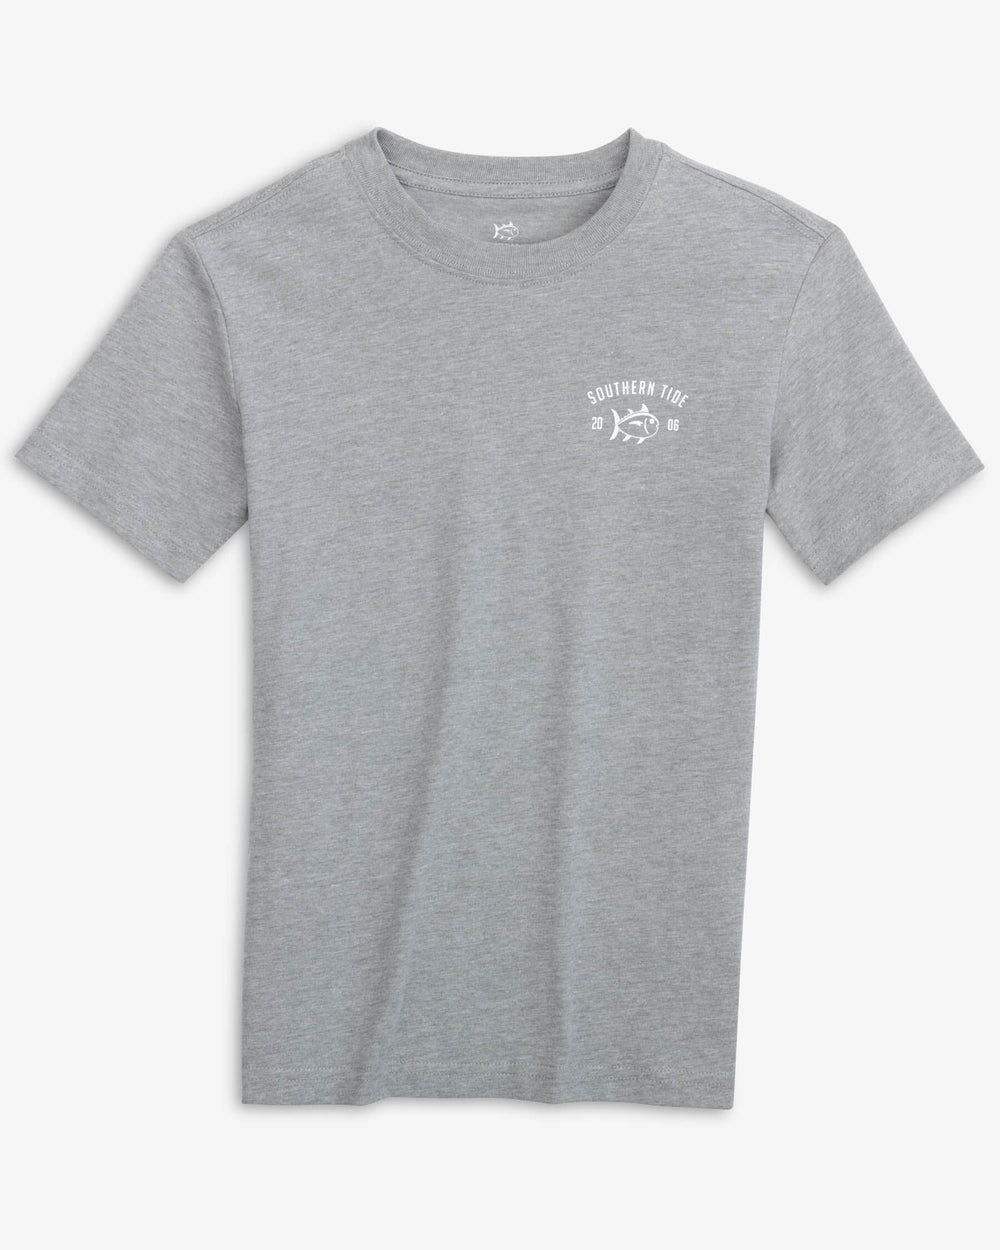 Southern Tide Boys' RRR Sj Heather T-Shirt, XL / Heather Quarry